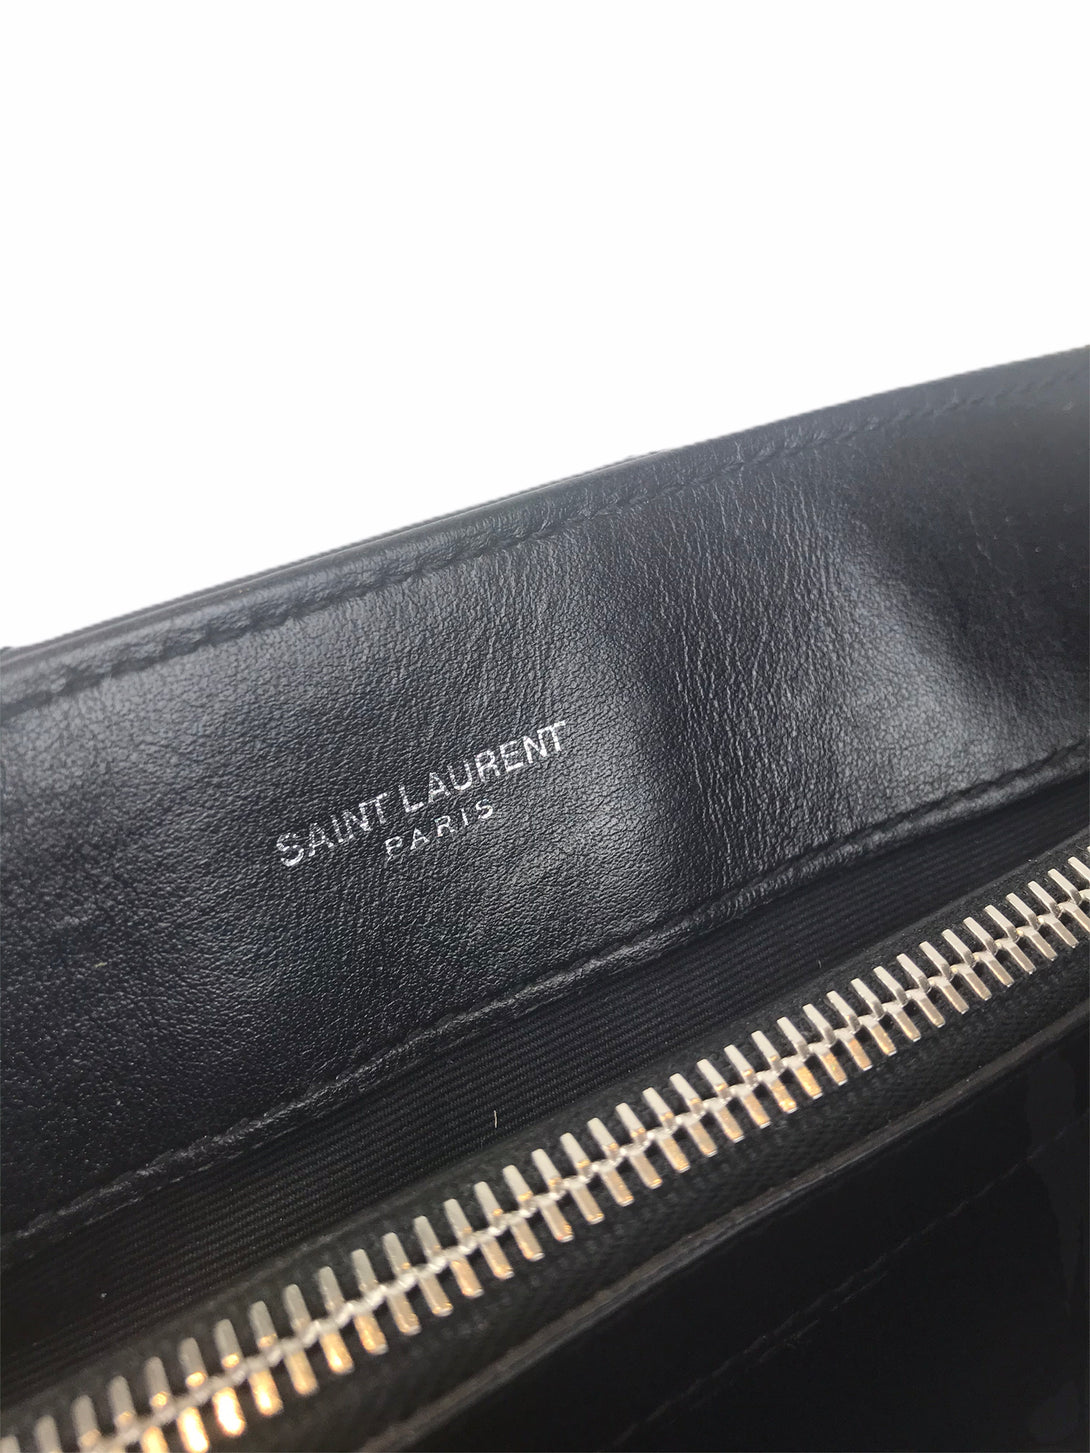 Saint Laurent Black Leather LouLou Shoulder Bag - As Seen on Instagram 23/08/2020 - Siopaella Designer Exchange